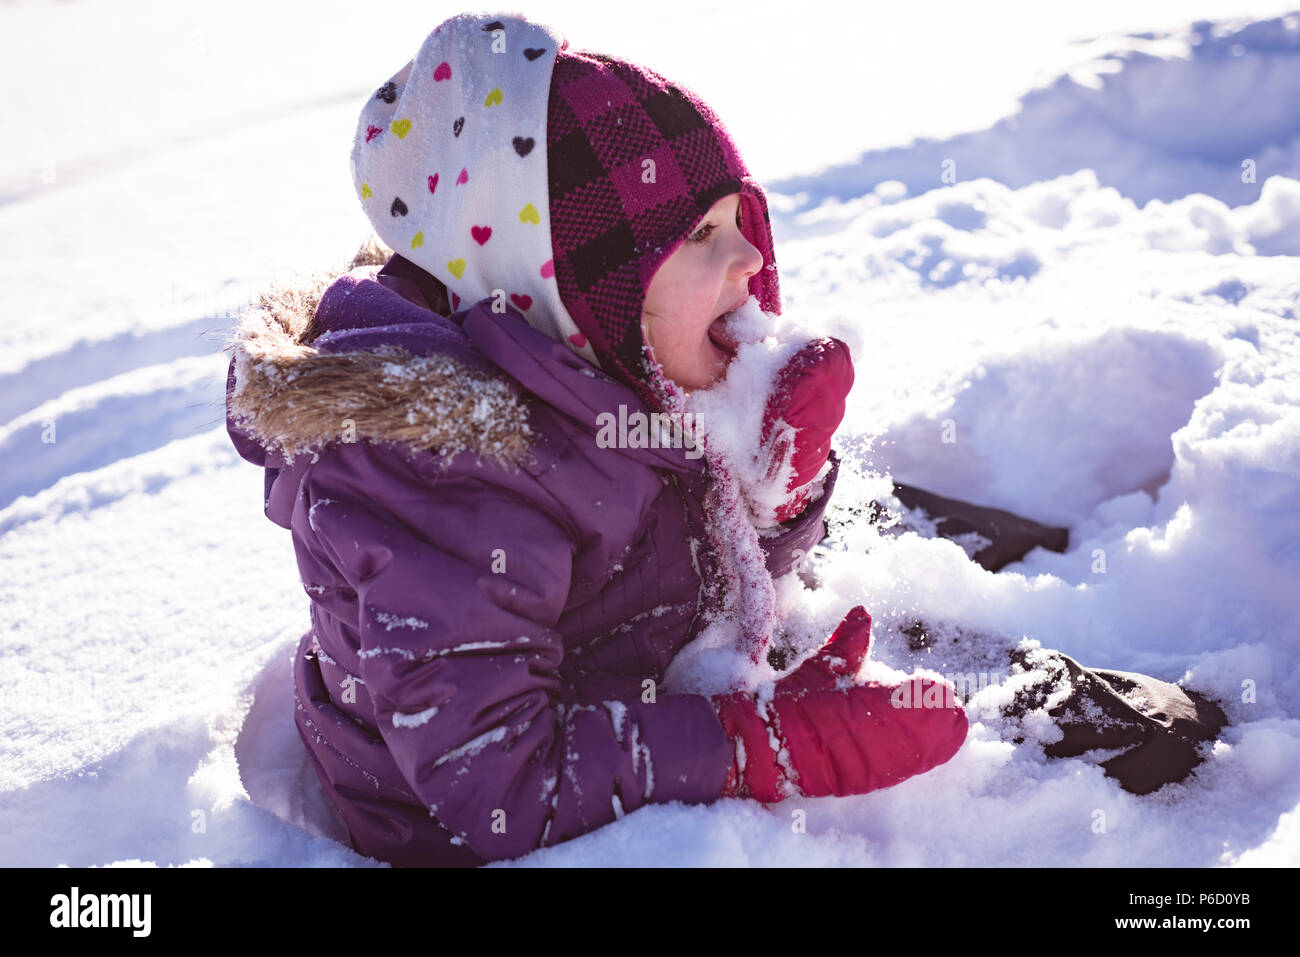 Cute girl licking snow Stock Photo